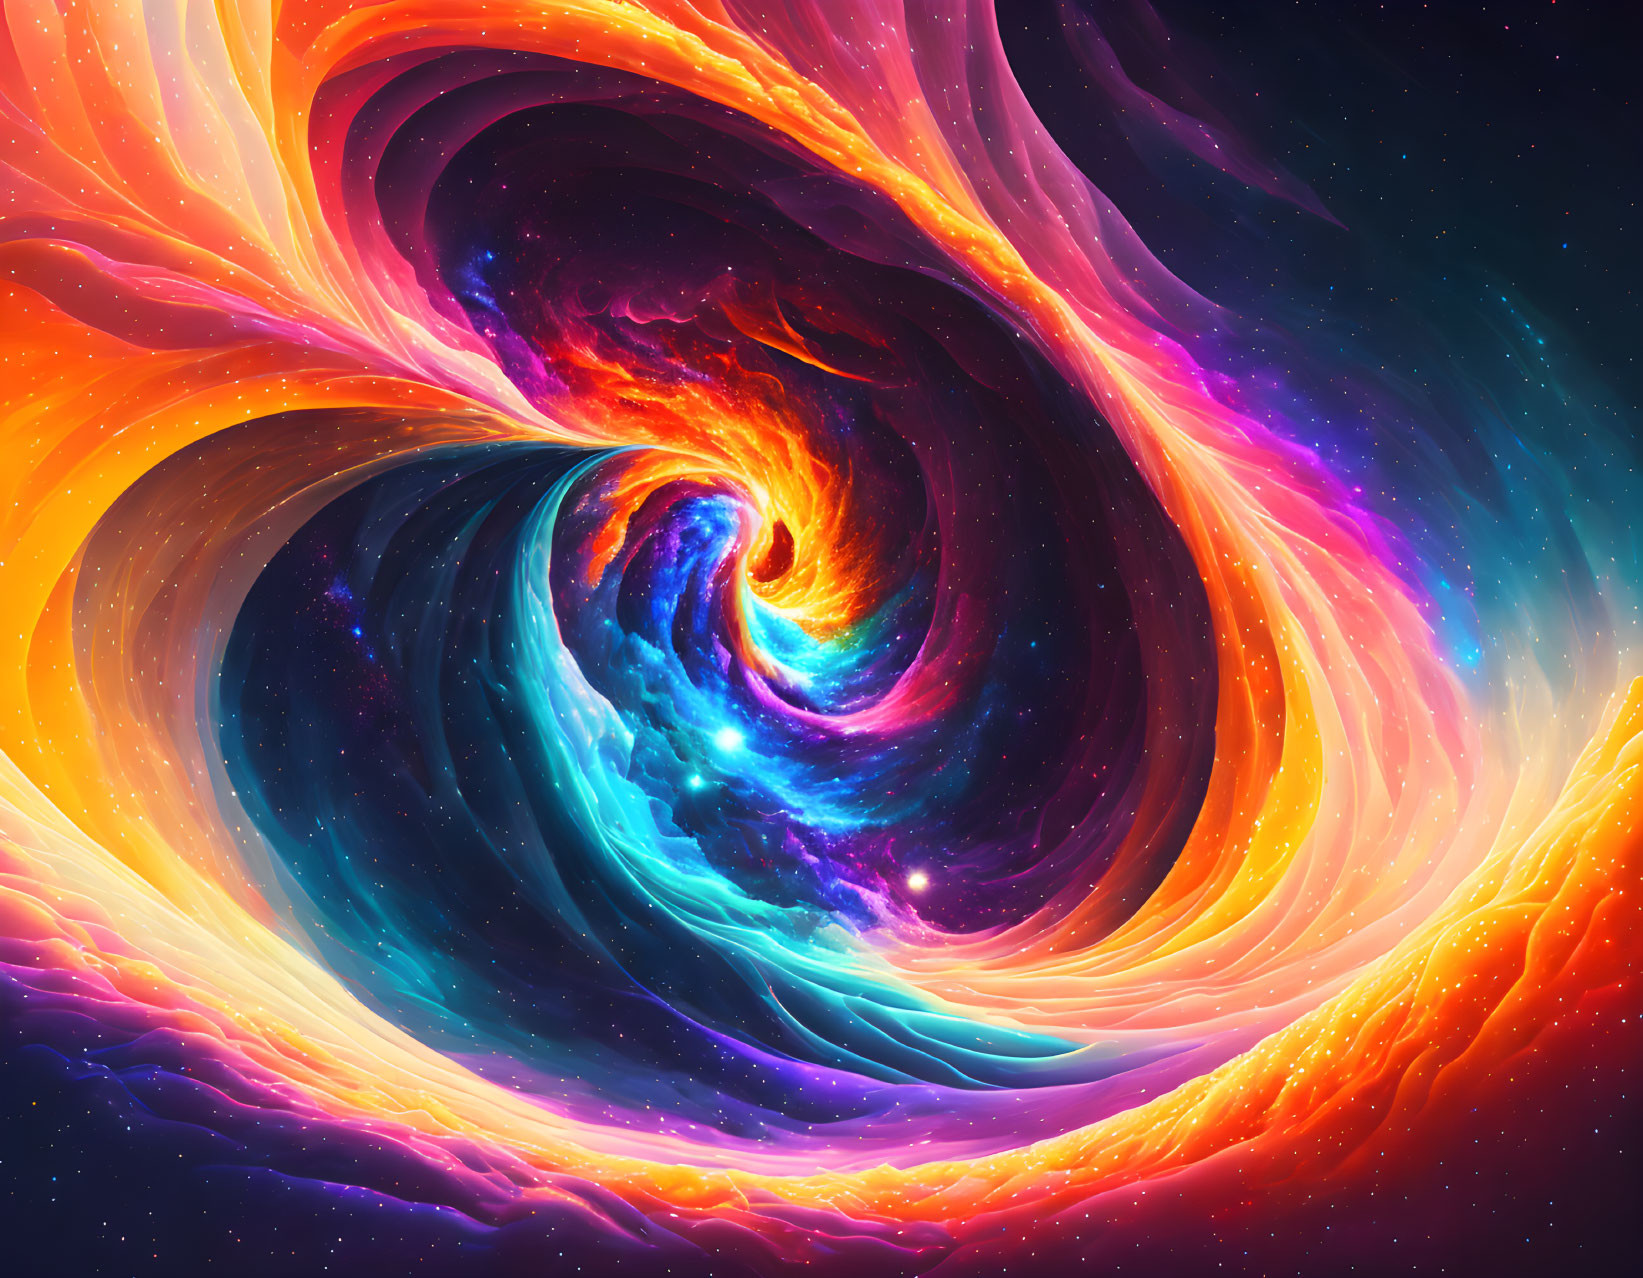 Colorful Cosmic Vortex Artwork in Orange, Blue, and Purple